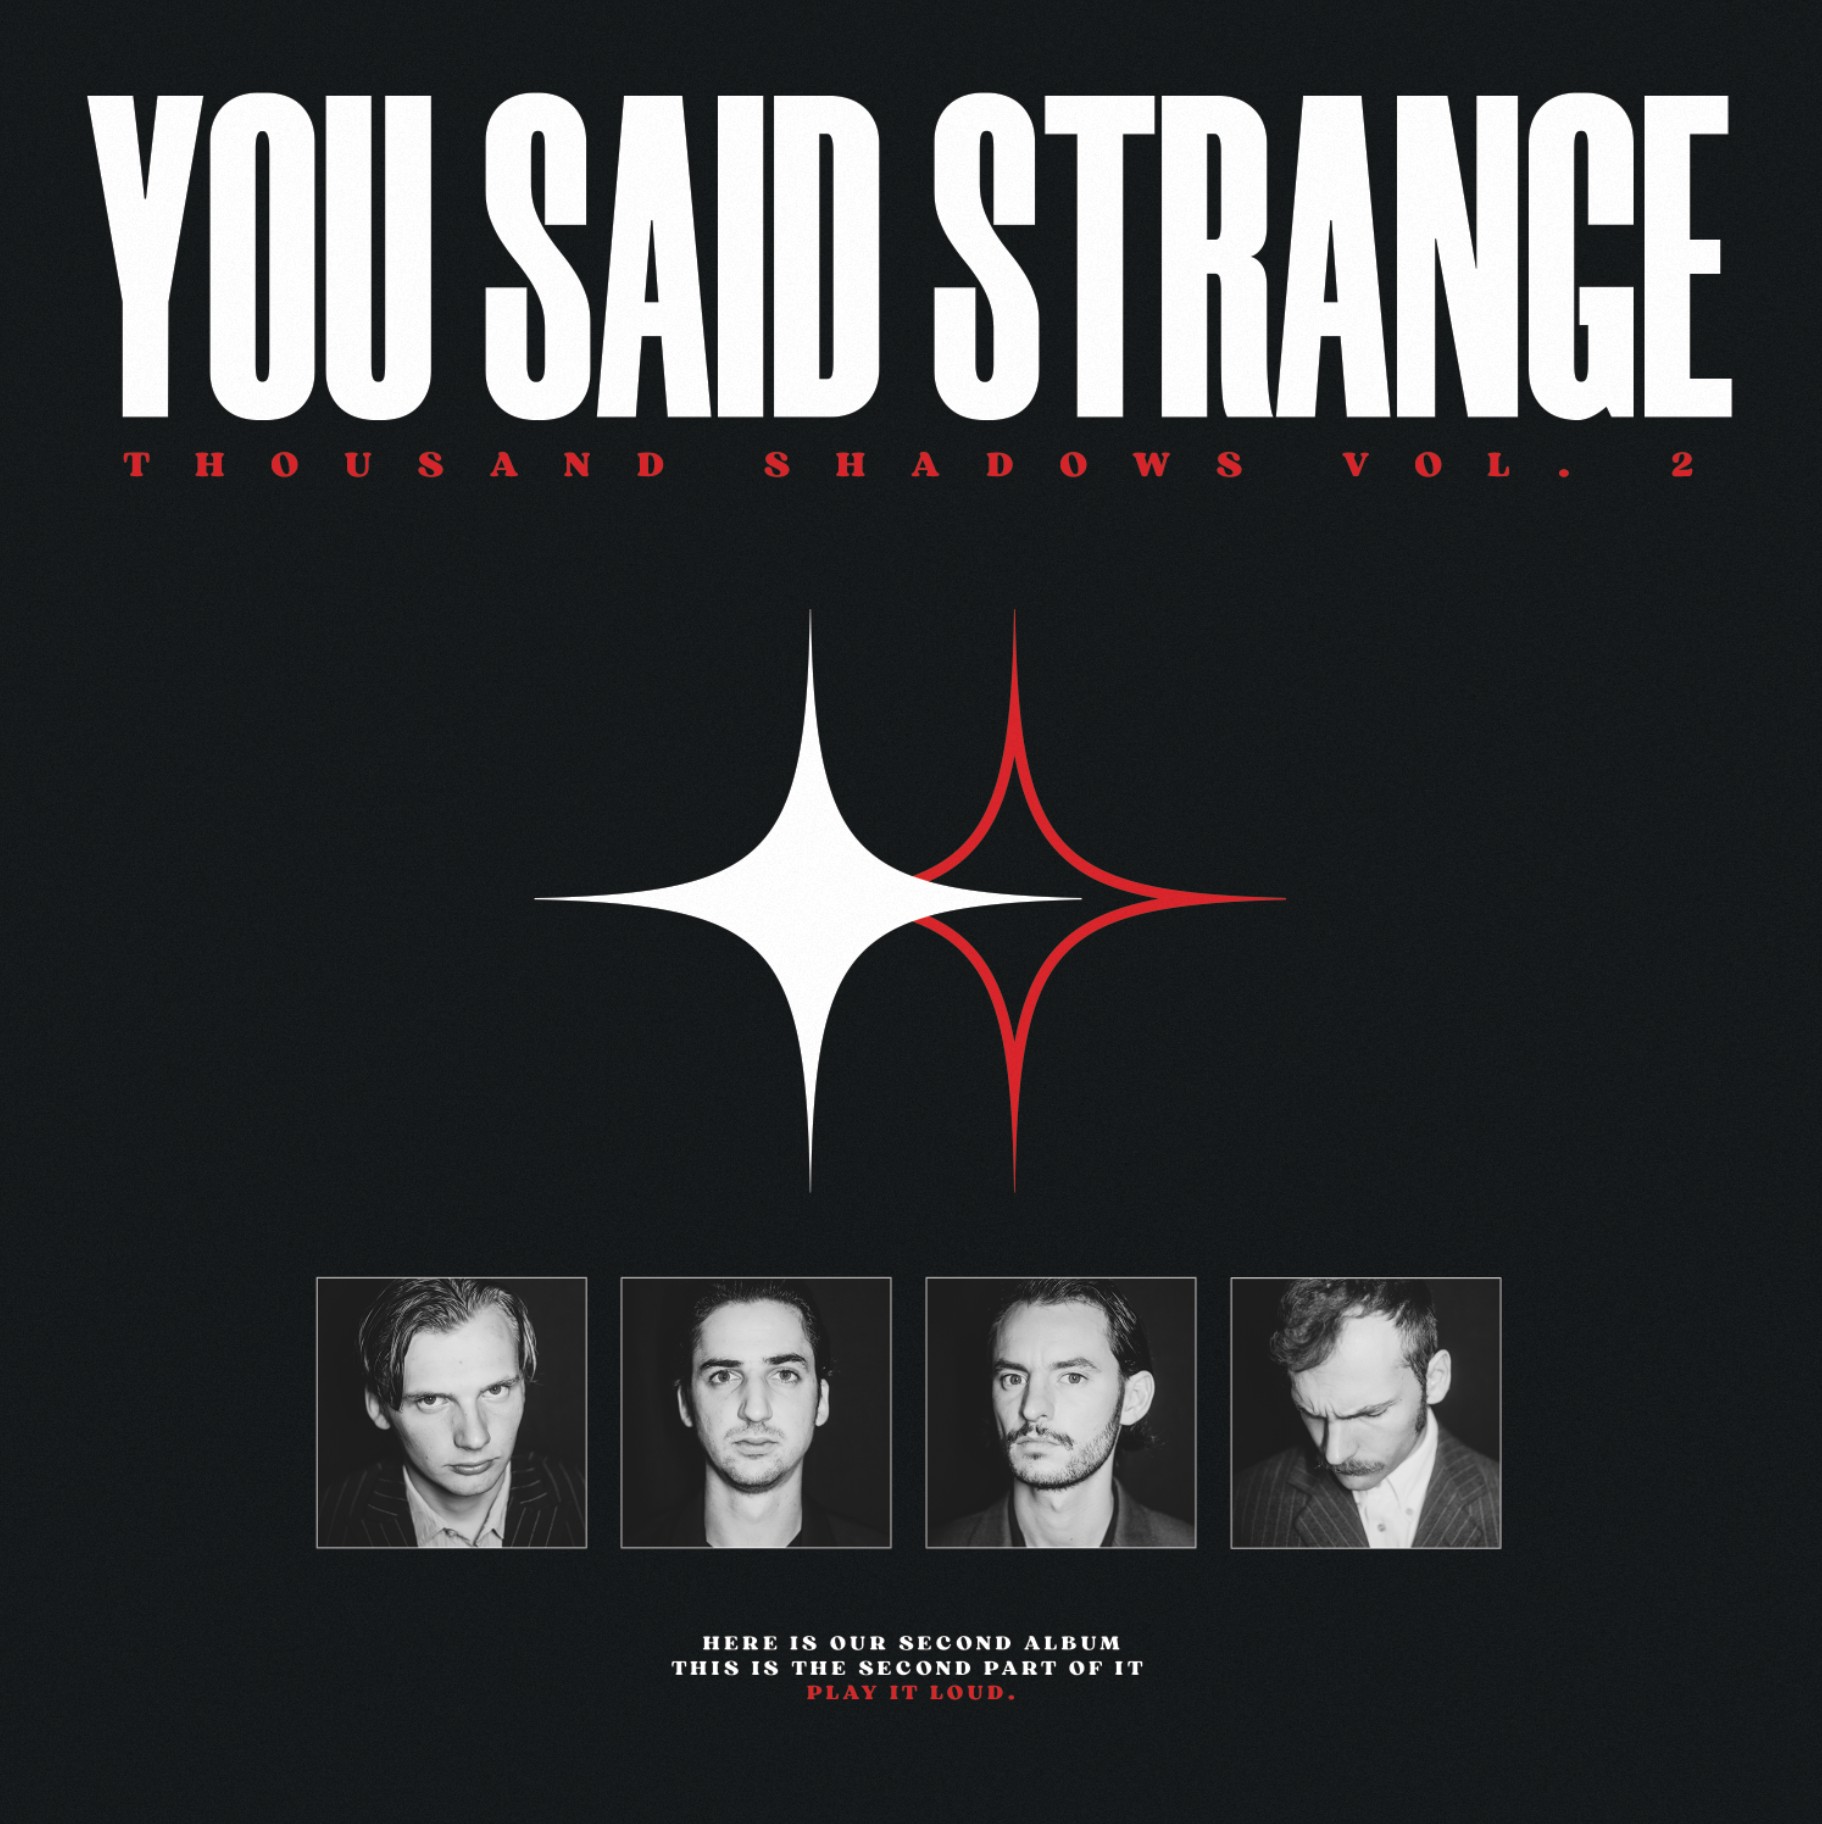 You Said Strange ‘Thousand Shadows Vol. 2’ album artwork